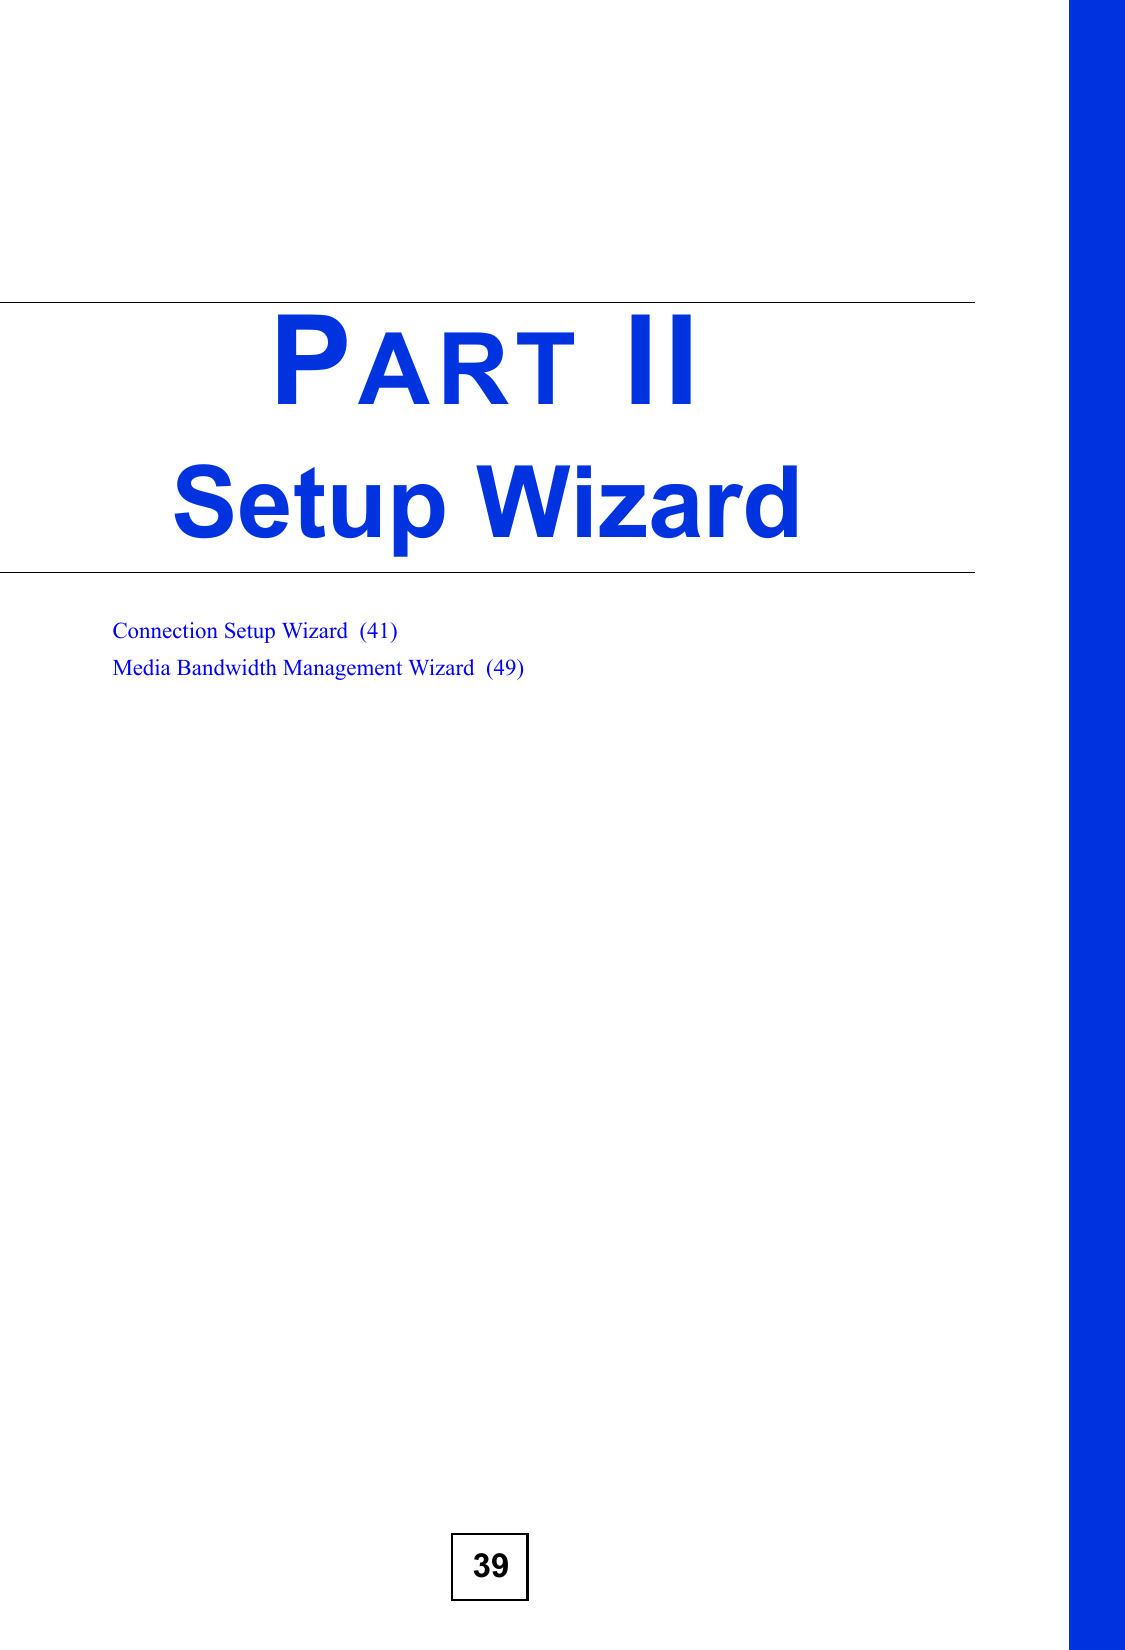 39PART IISetup WizardConnection Setup Wizard  (41)Media Bandwidth Management Wizard  (49)